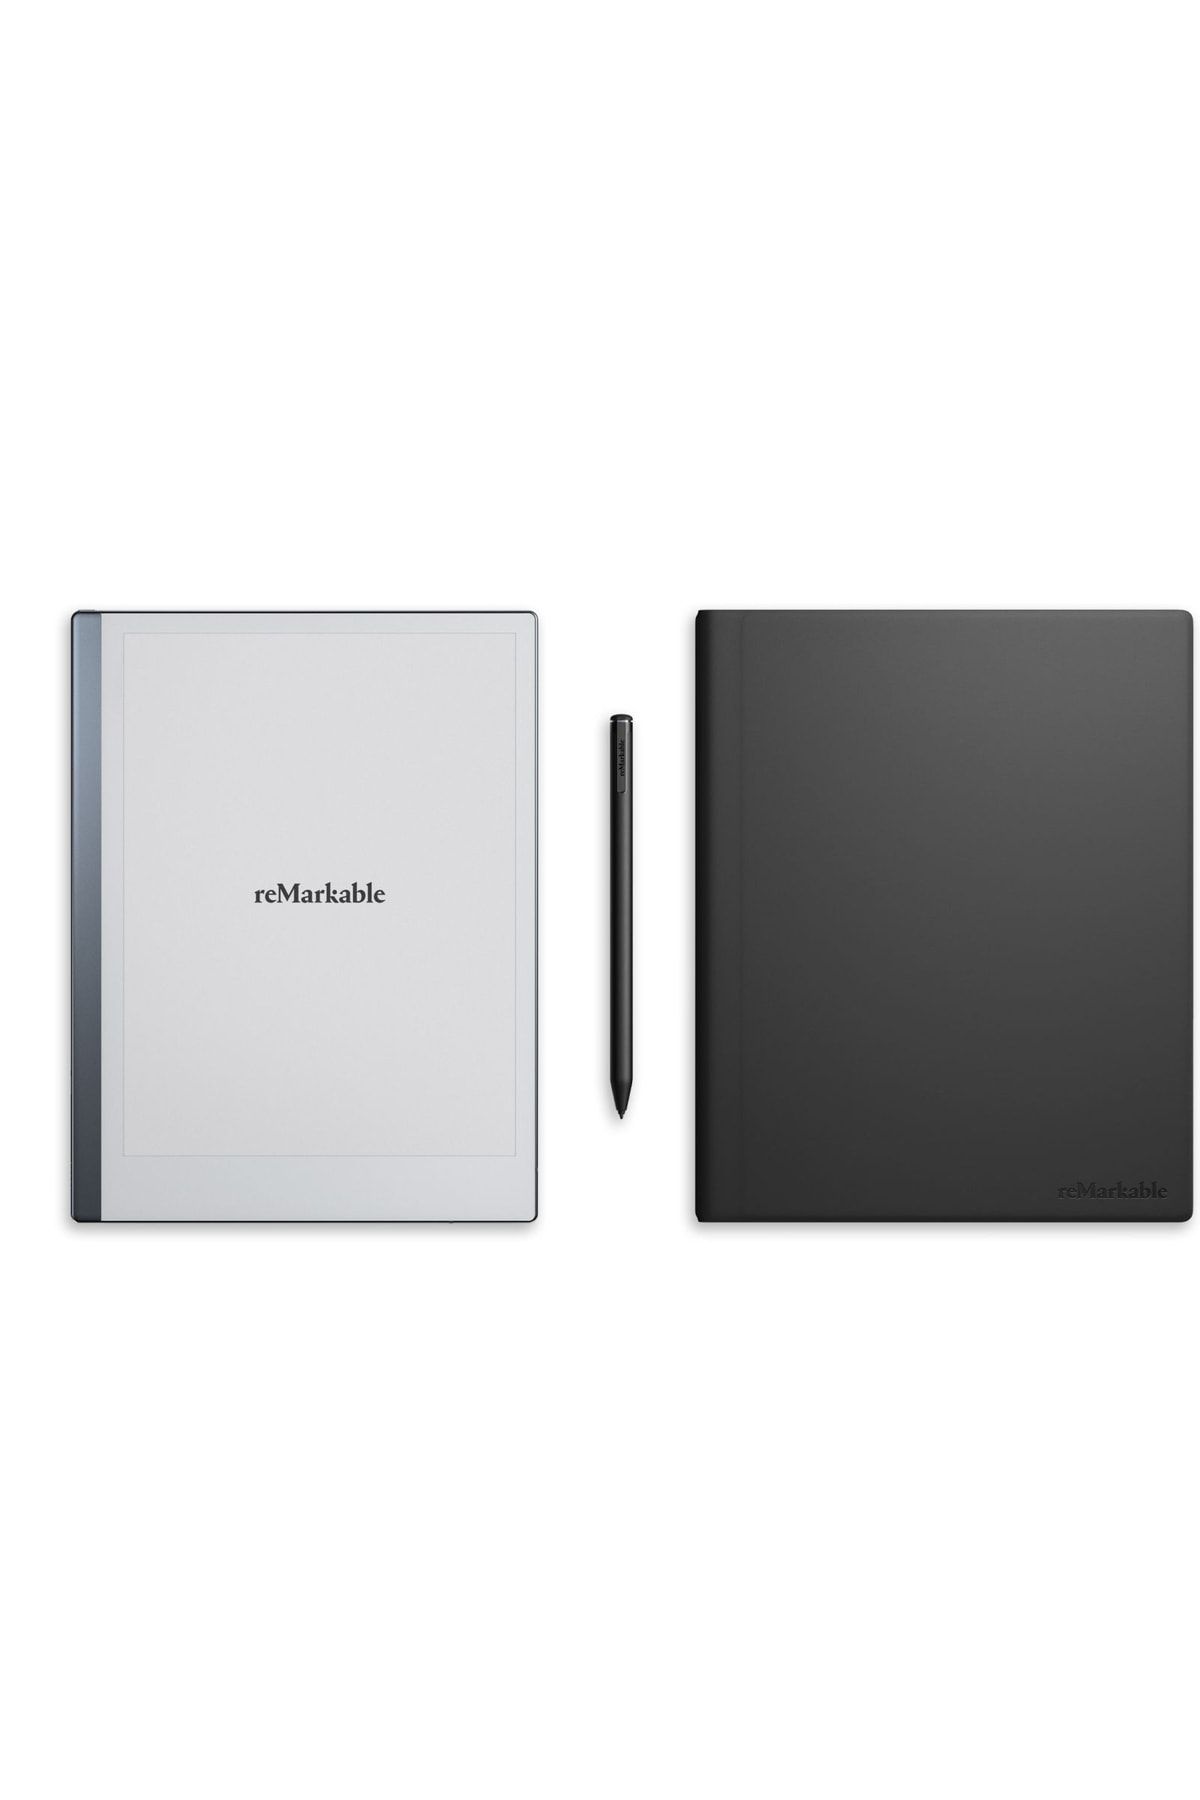 remarkable 2 Digital Paper Tablet + Marker Plus + Kapaklı Siyah Kılıf